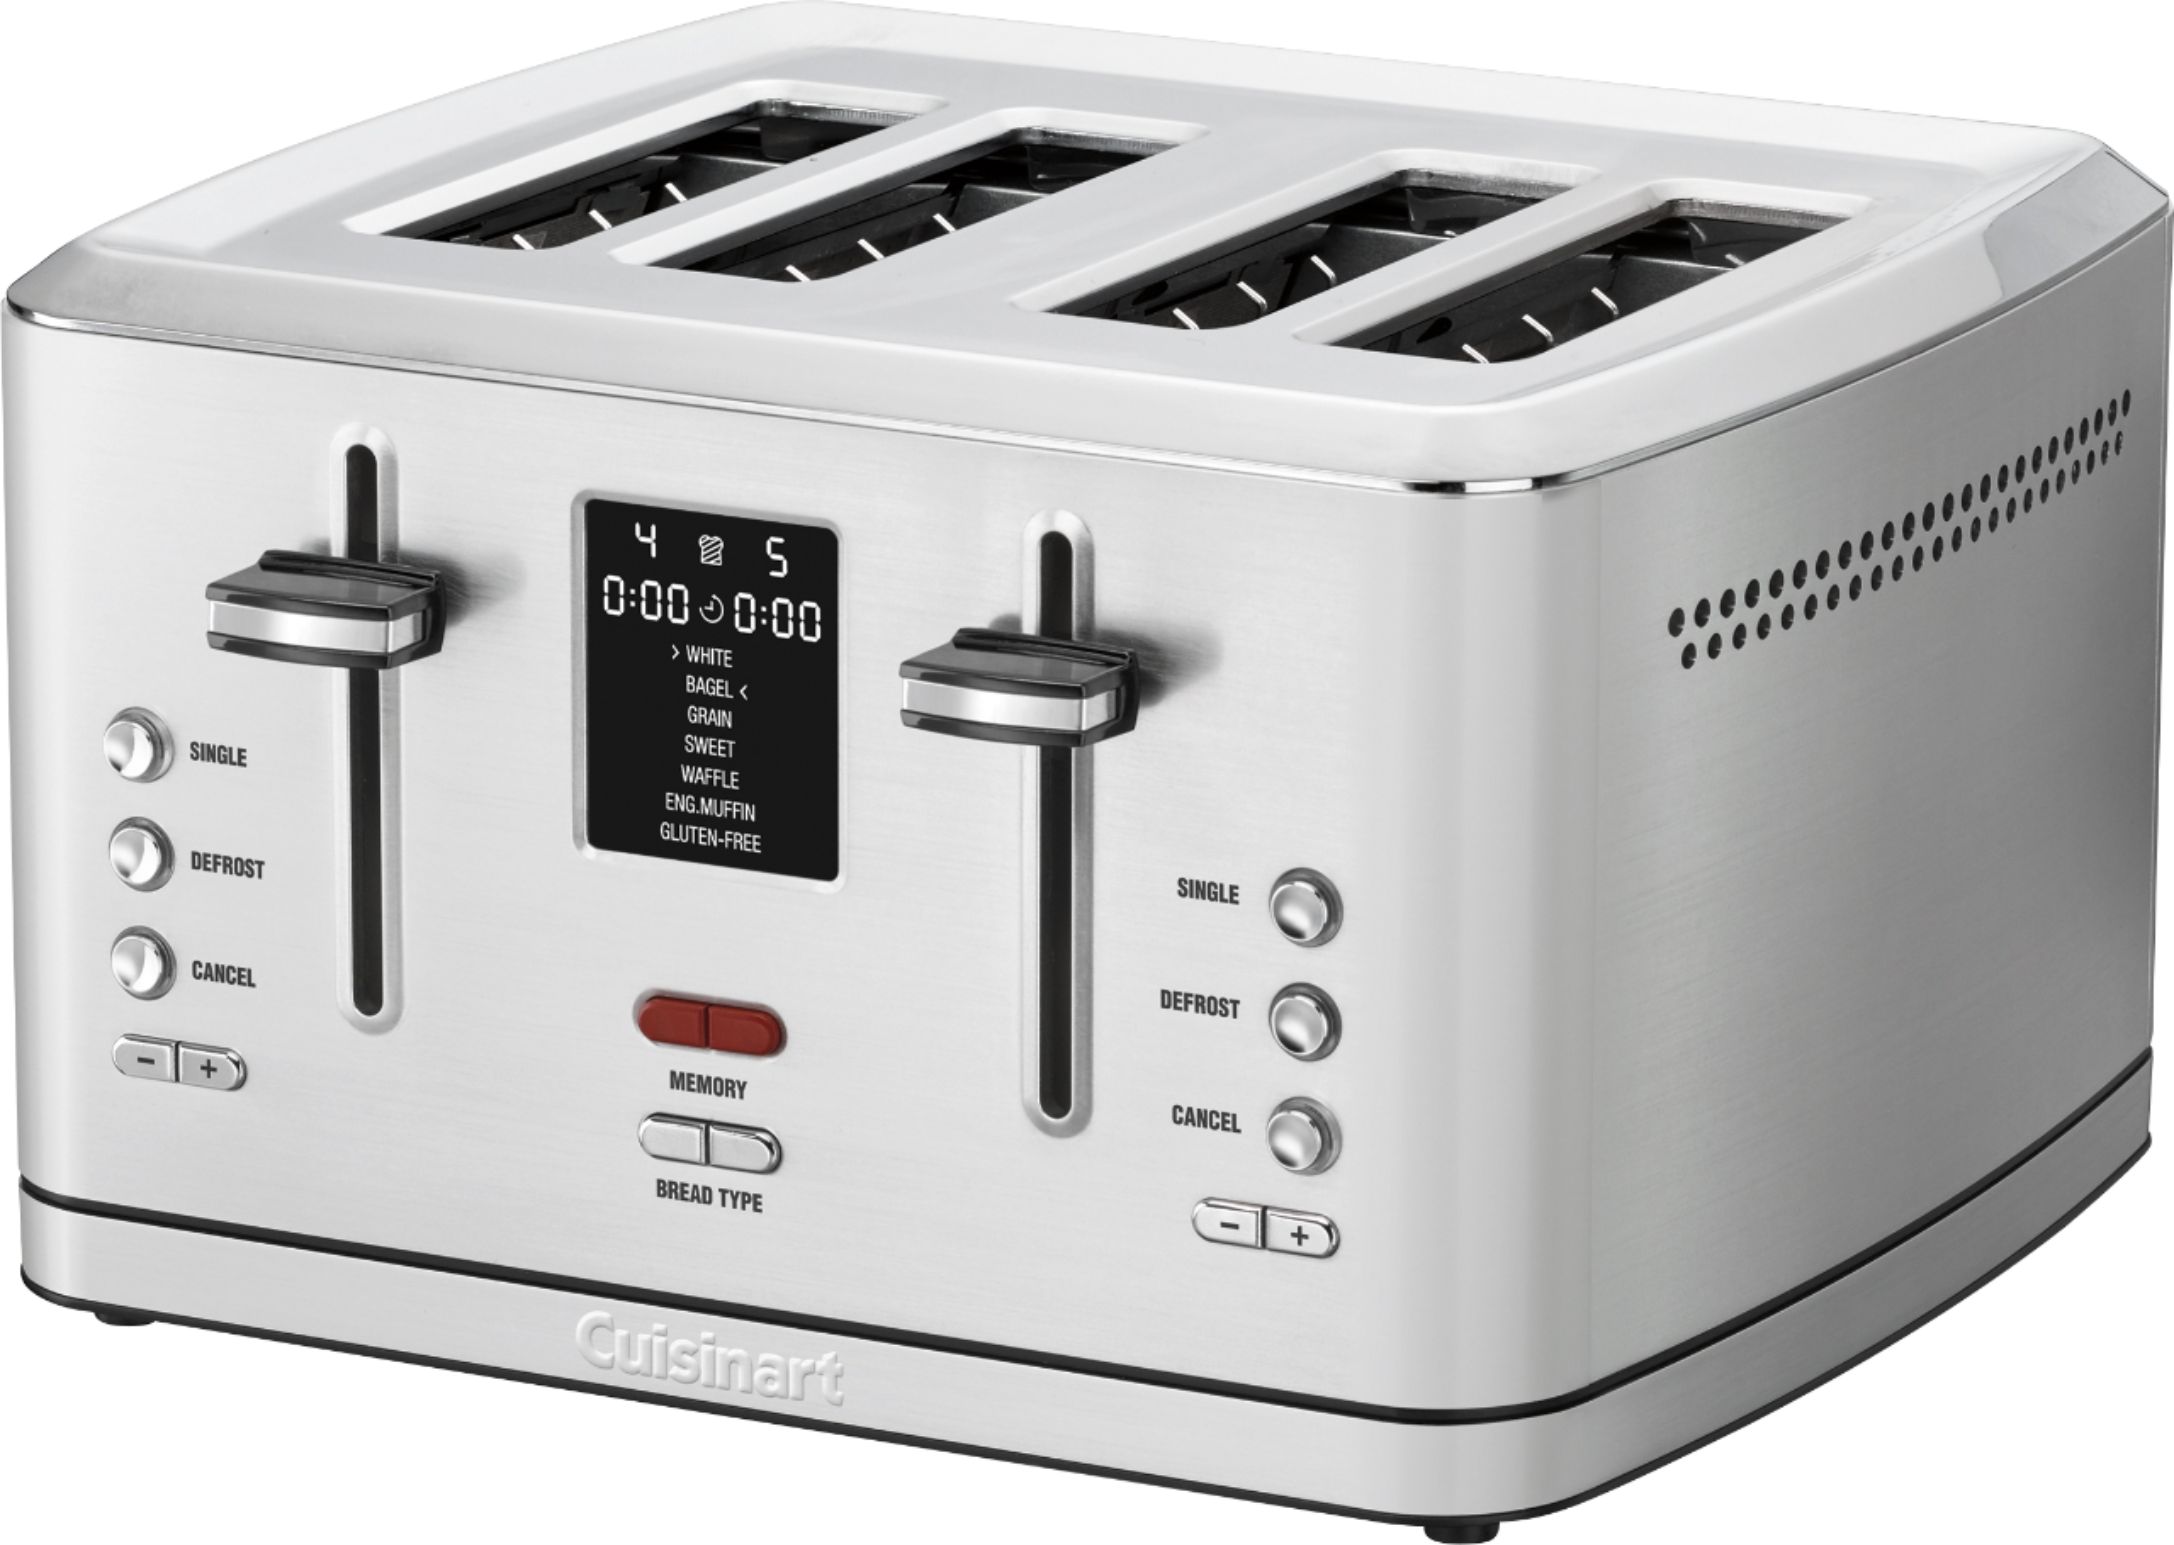 Cuisinart 4-Slice Digital Toaster with MemorySet Feature Stainless Cuisinart Stainless Steel Toaster 4 Slice